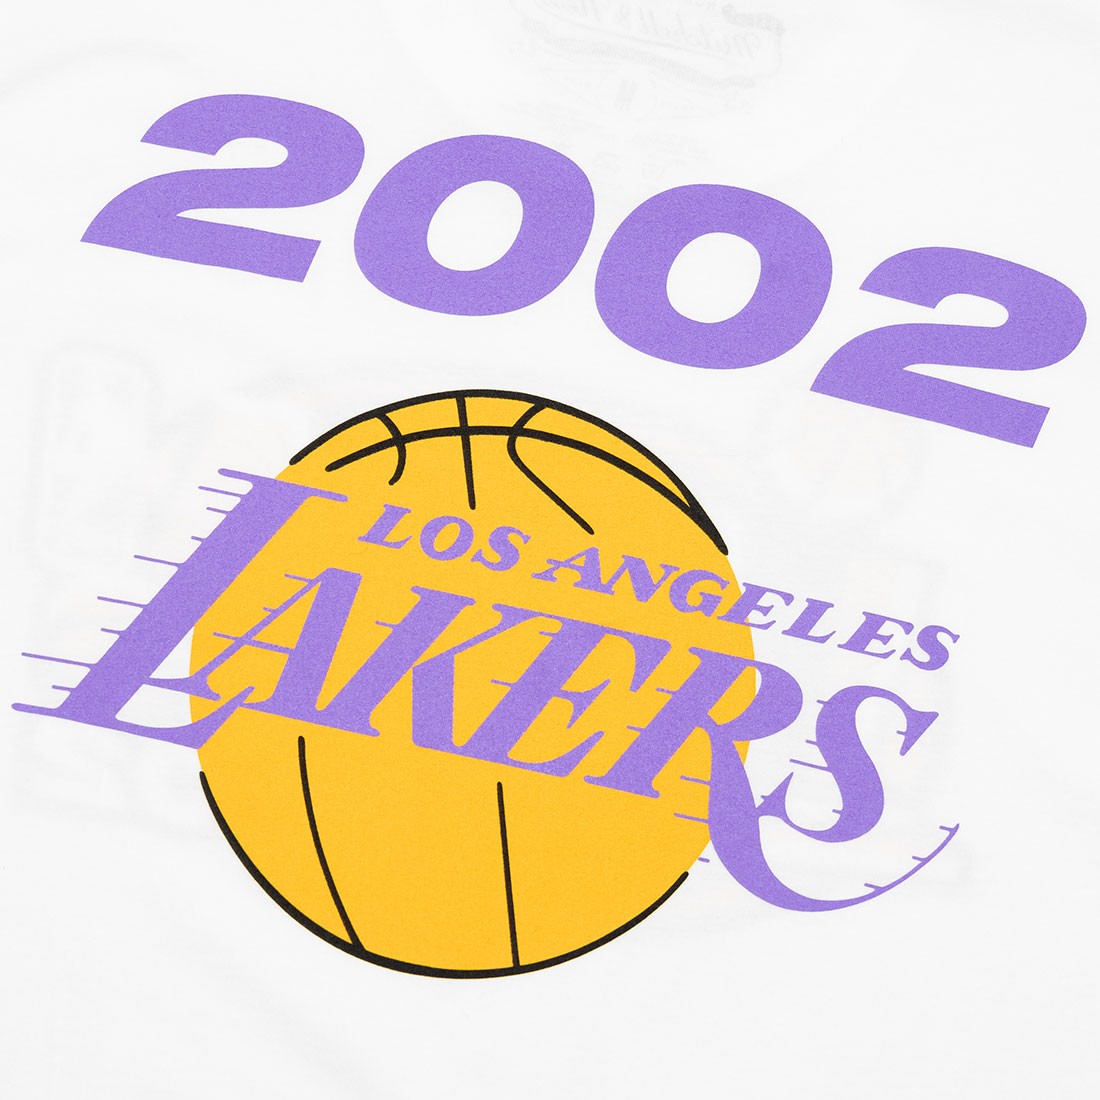 Mitchell & Ness x NBA Champs Fest Lakers T-Shirt - White